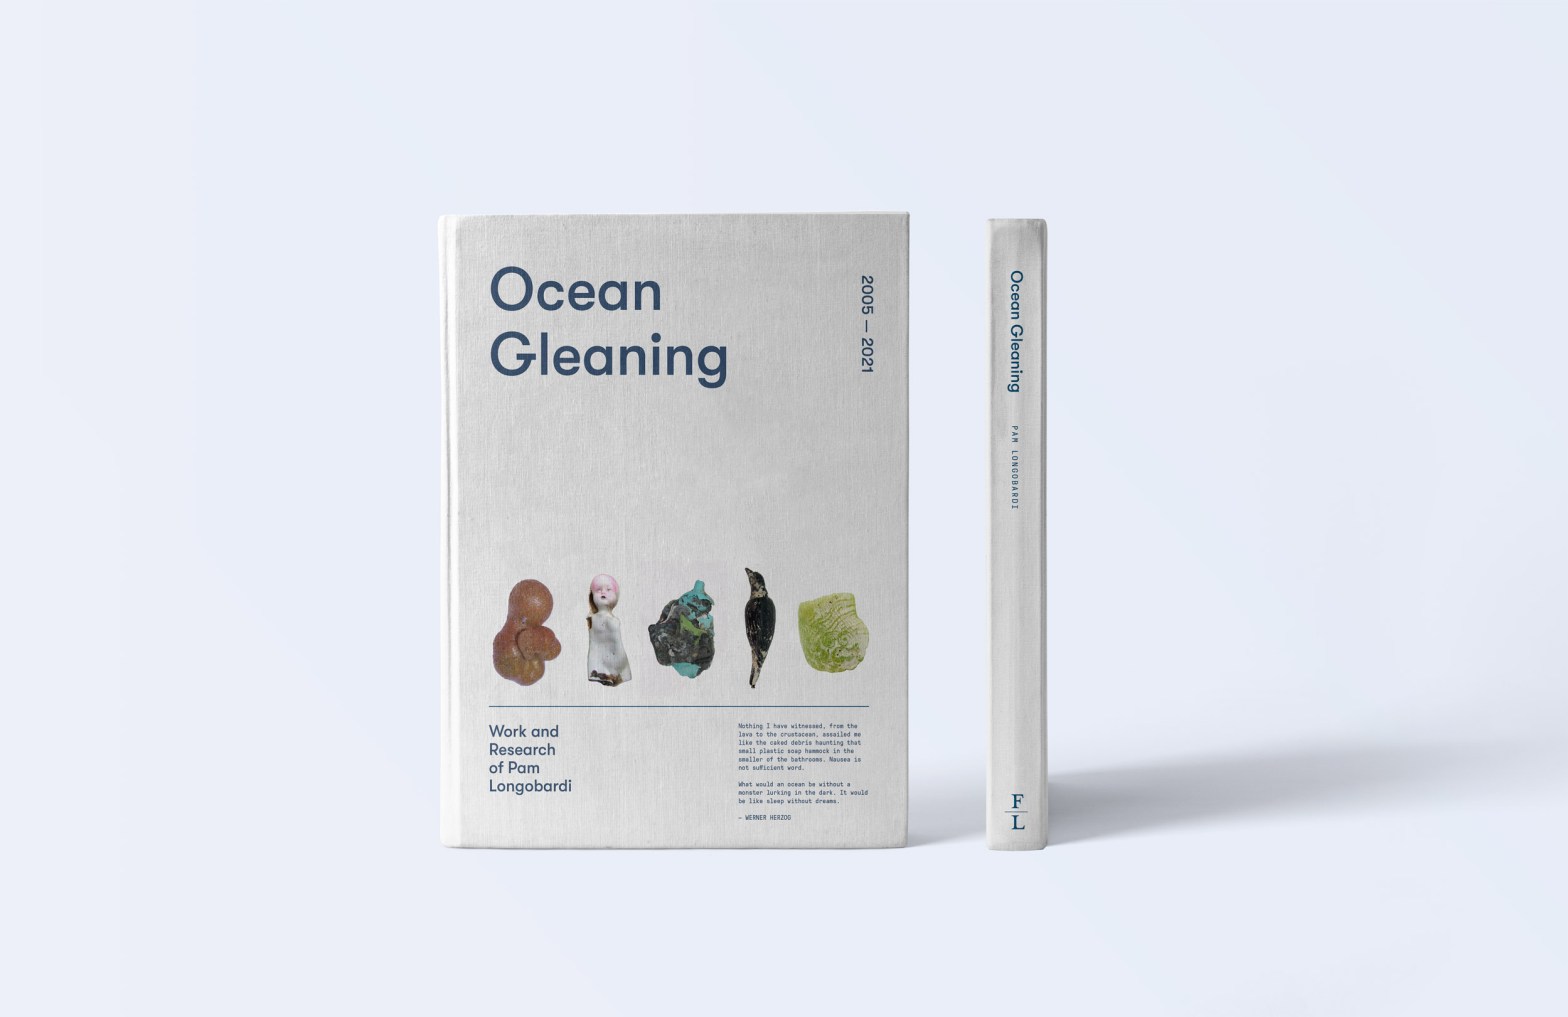 Ocean Gleaning (2022)